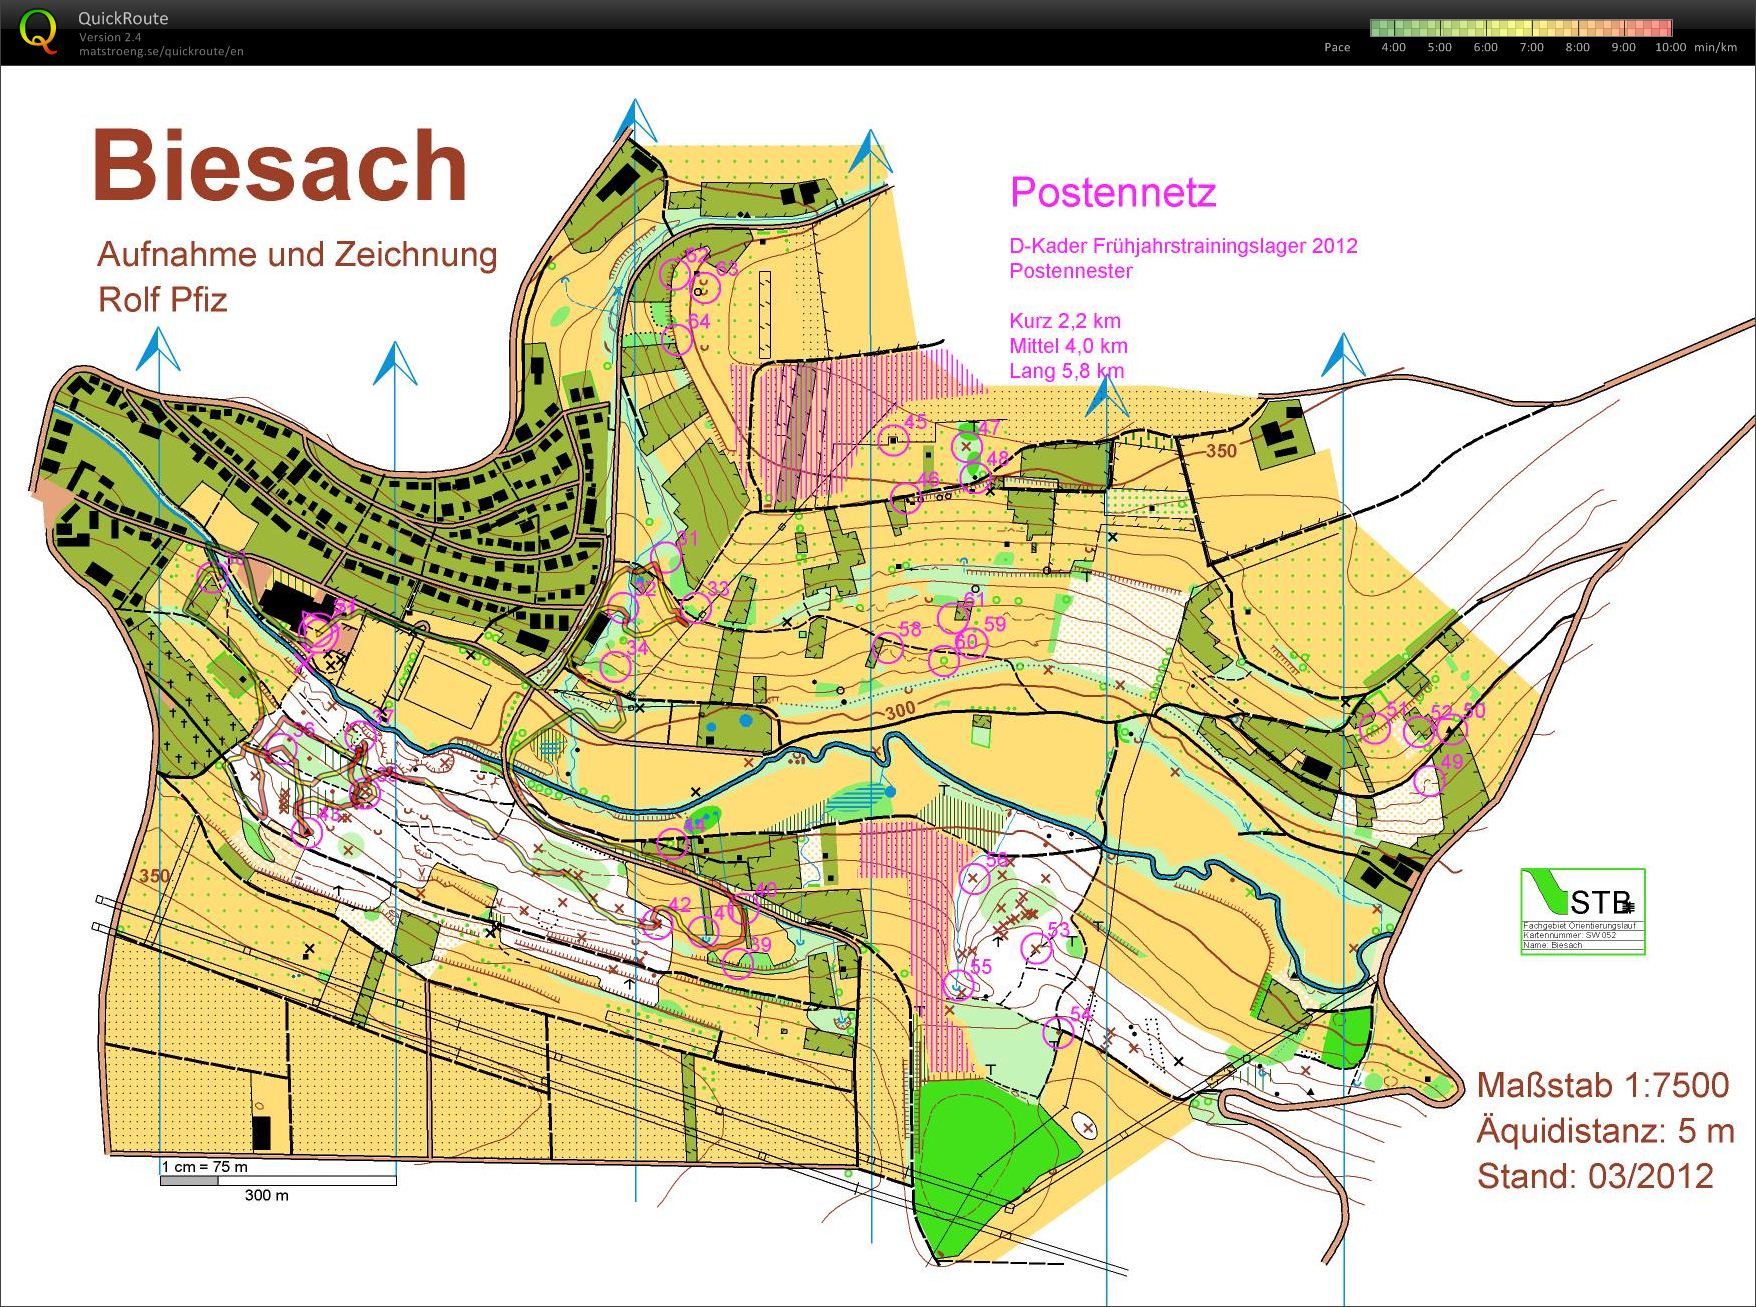 Training Biesach (Schatten) (24/03/2012)